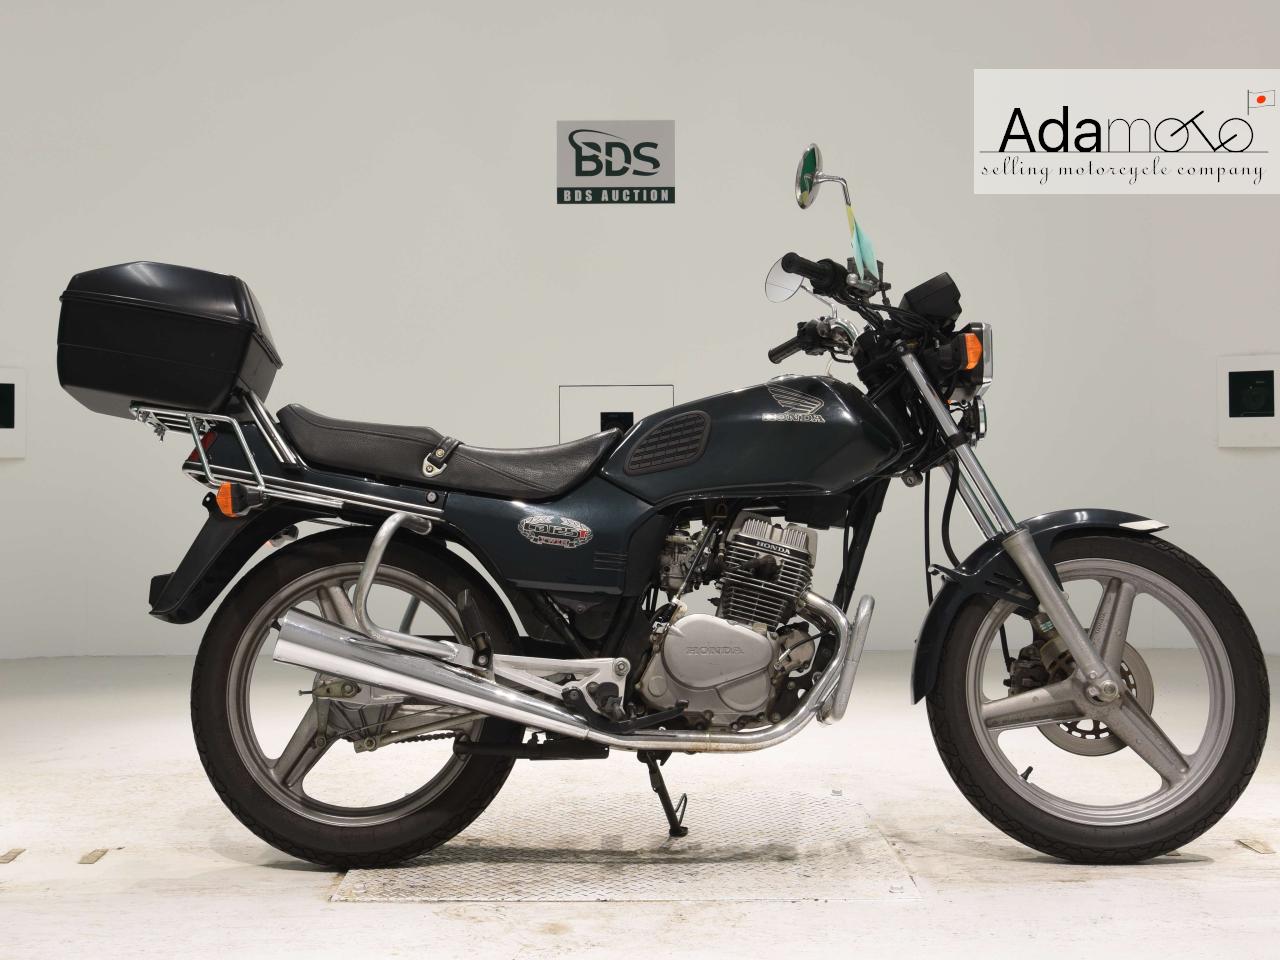 Honda CB125T - Adamoto - Motorcycles from Japan